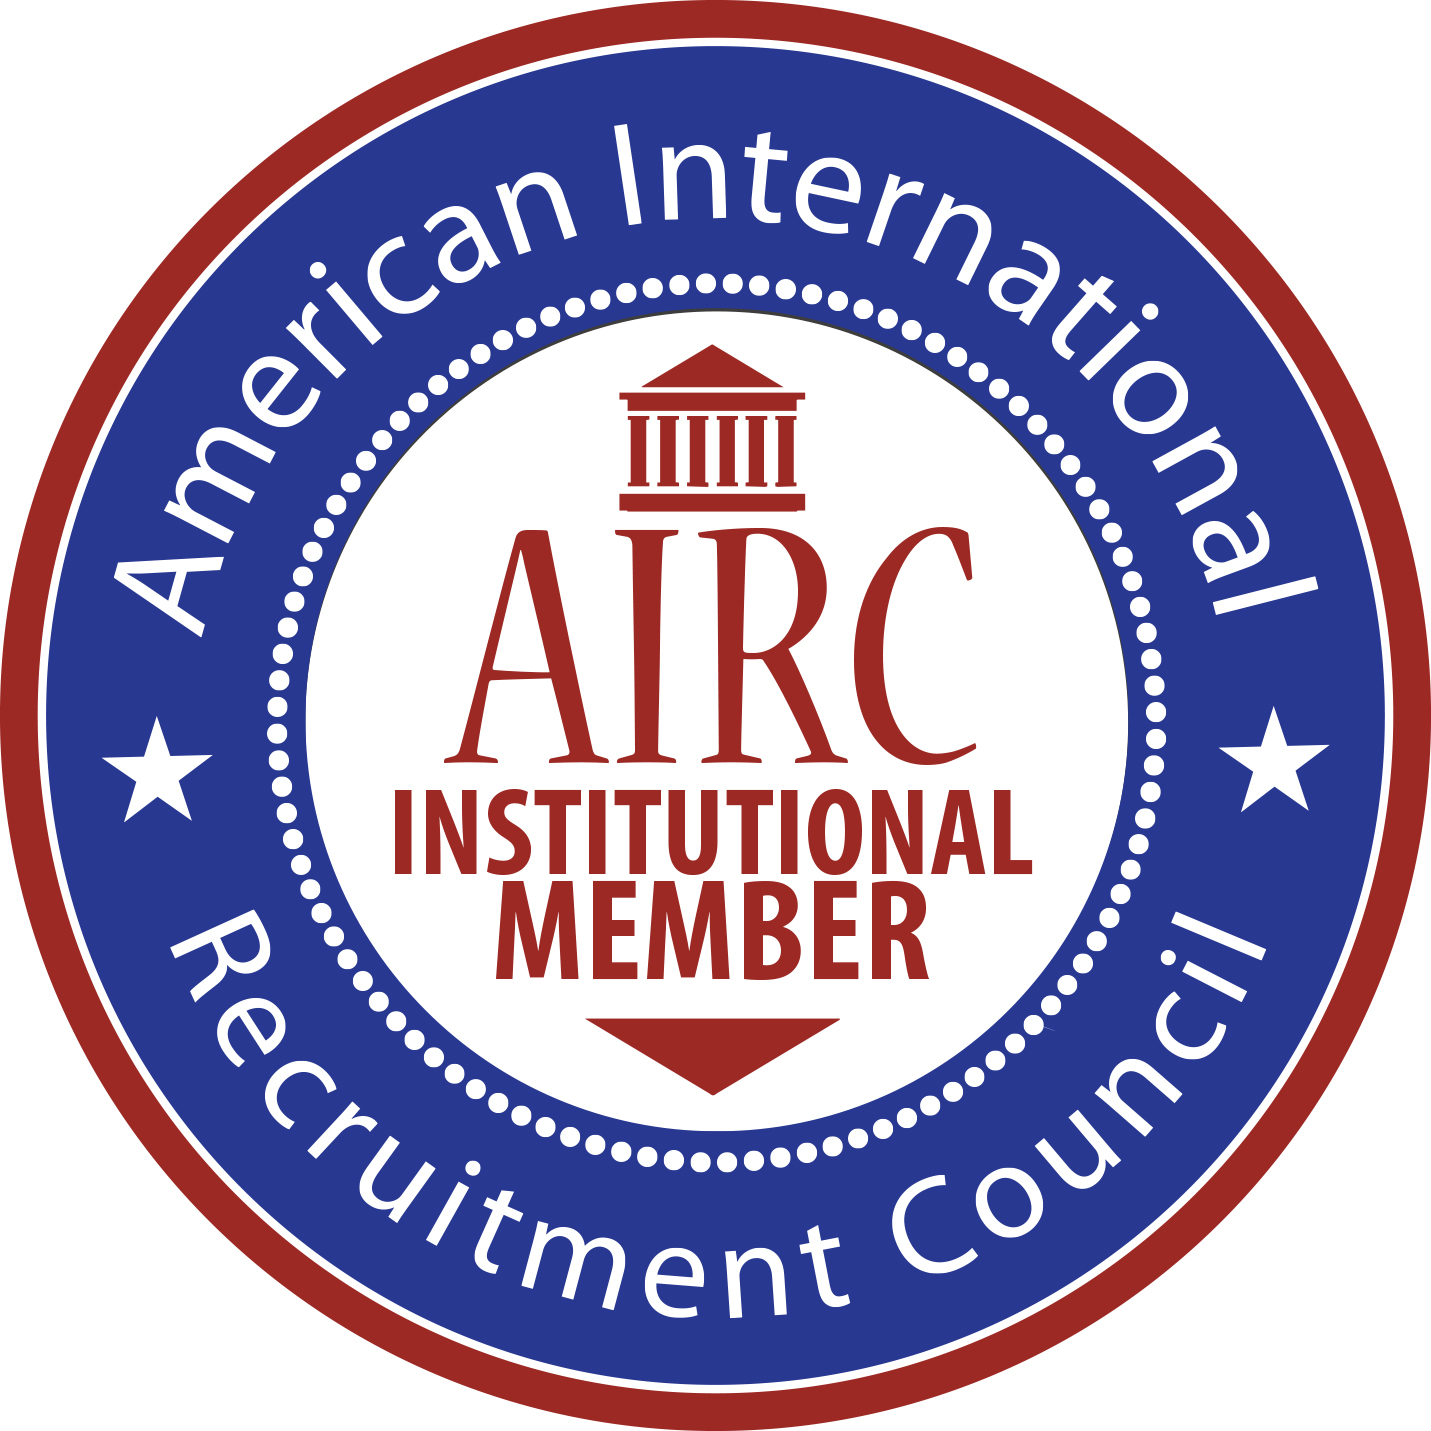 American International Recruitment Council